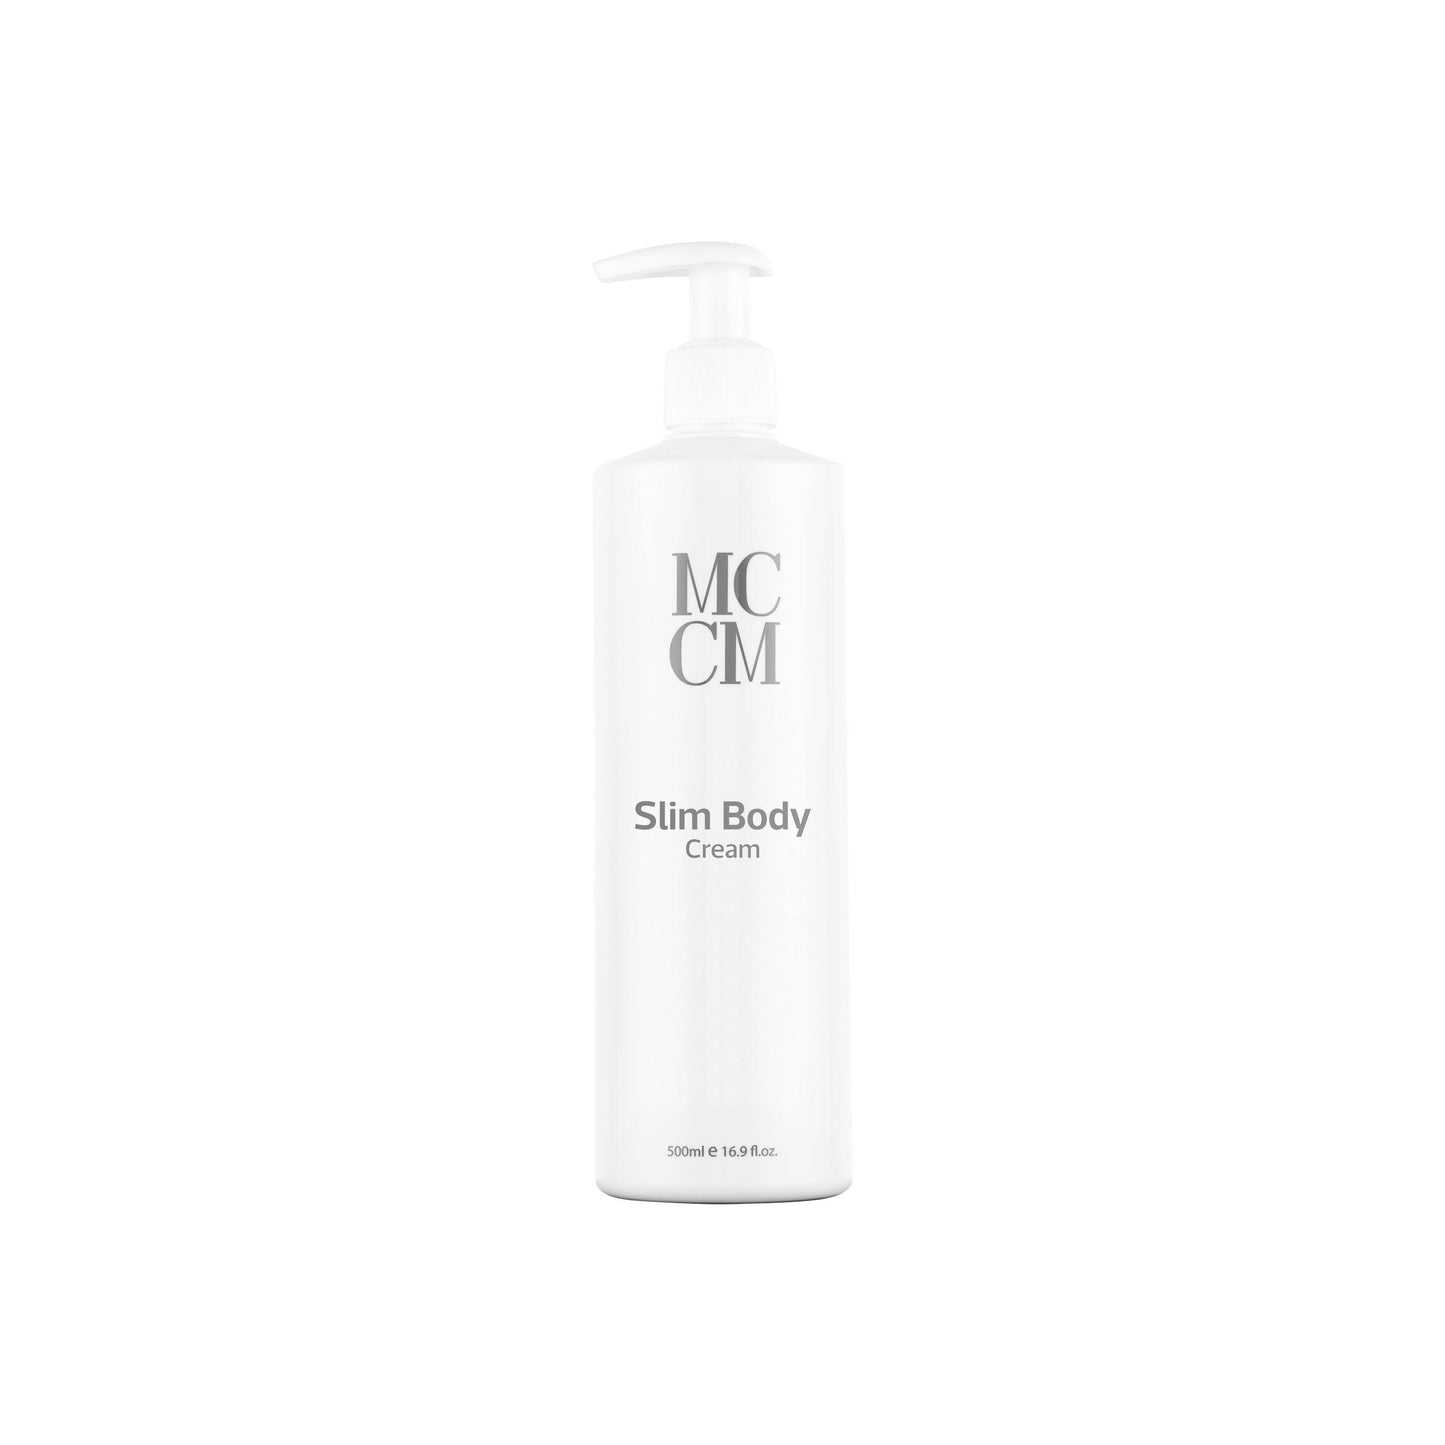 Slim Body Cream - MCCM Medical Cosmetics